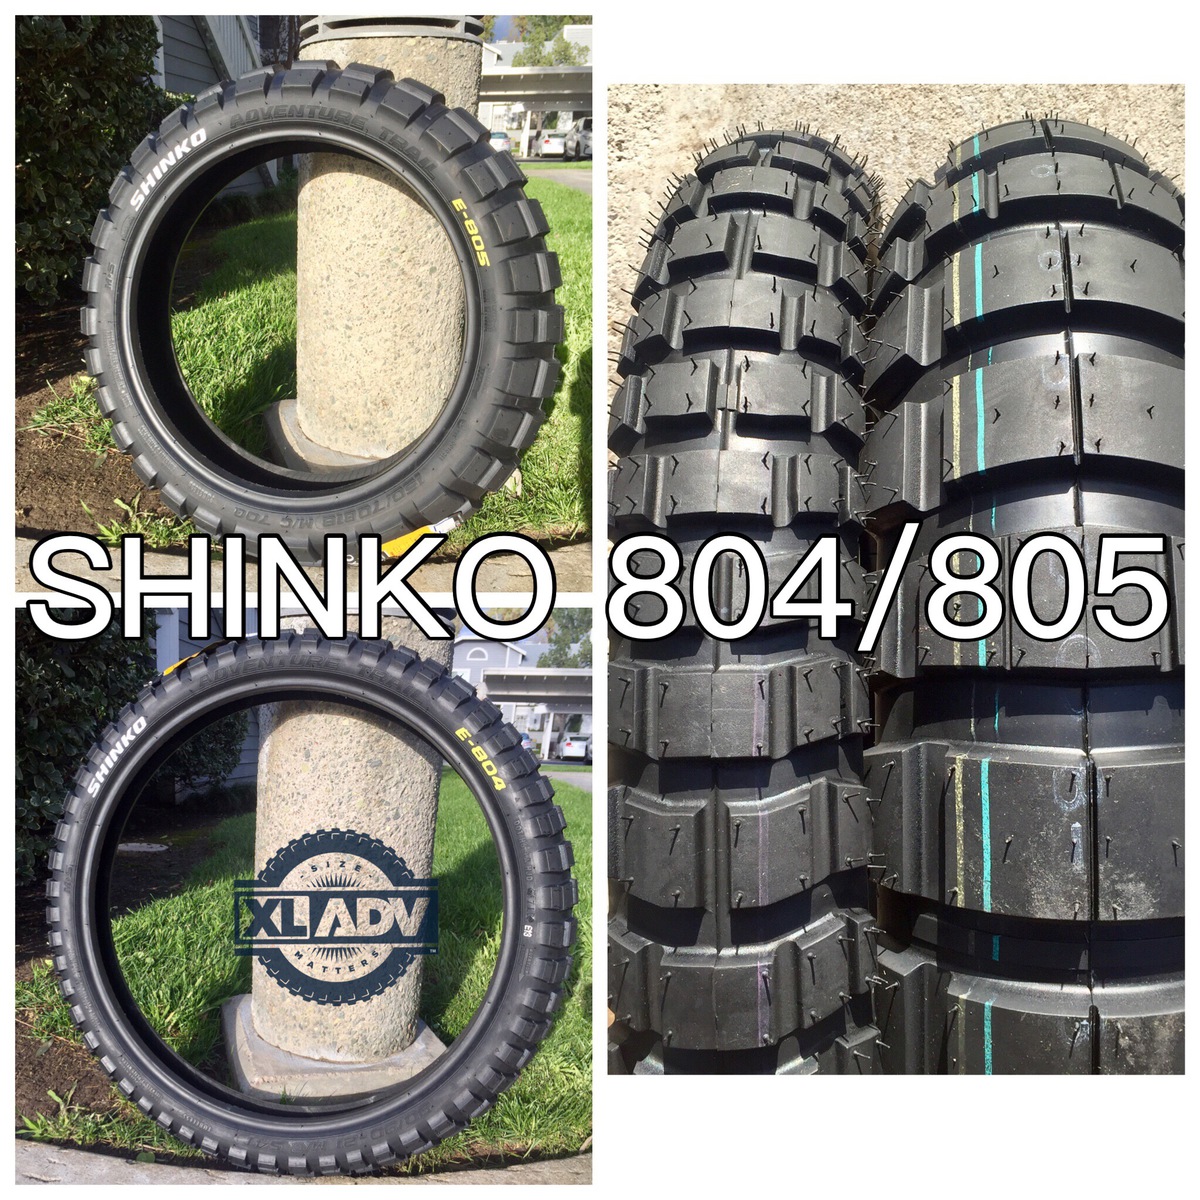 Shinko 804/805 - Gear, Farkles and Equipment - XL Adventure Motorcycle  Community